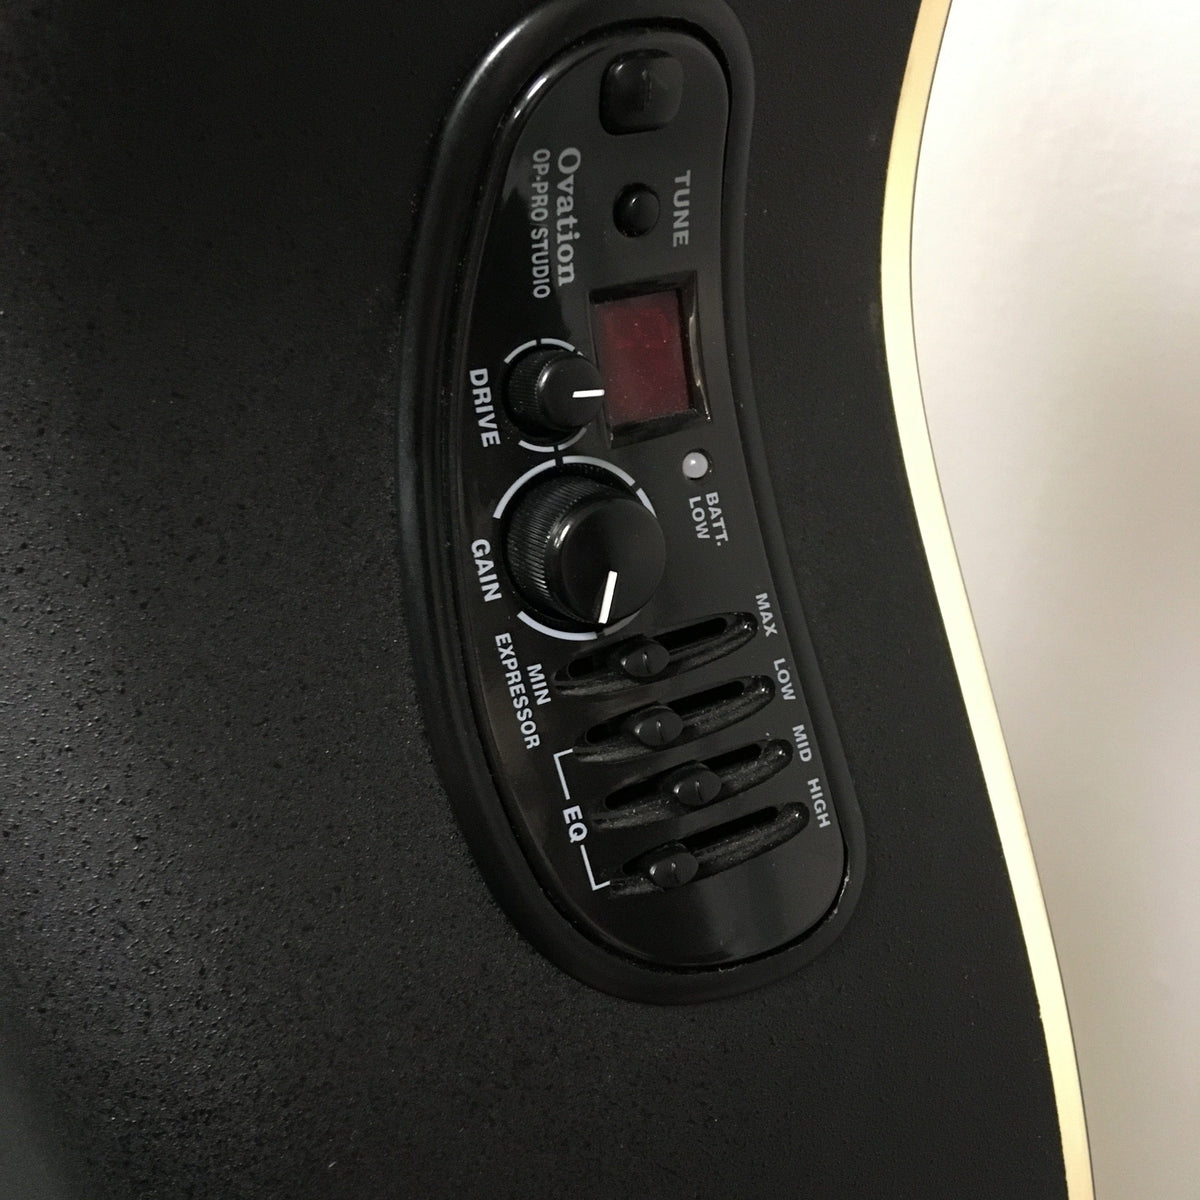 Ovation Legend 2077 AX Gloss Black Used Guitars on Main